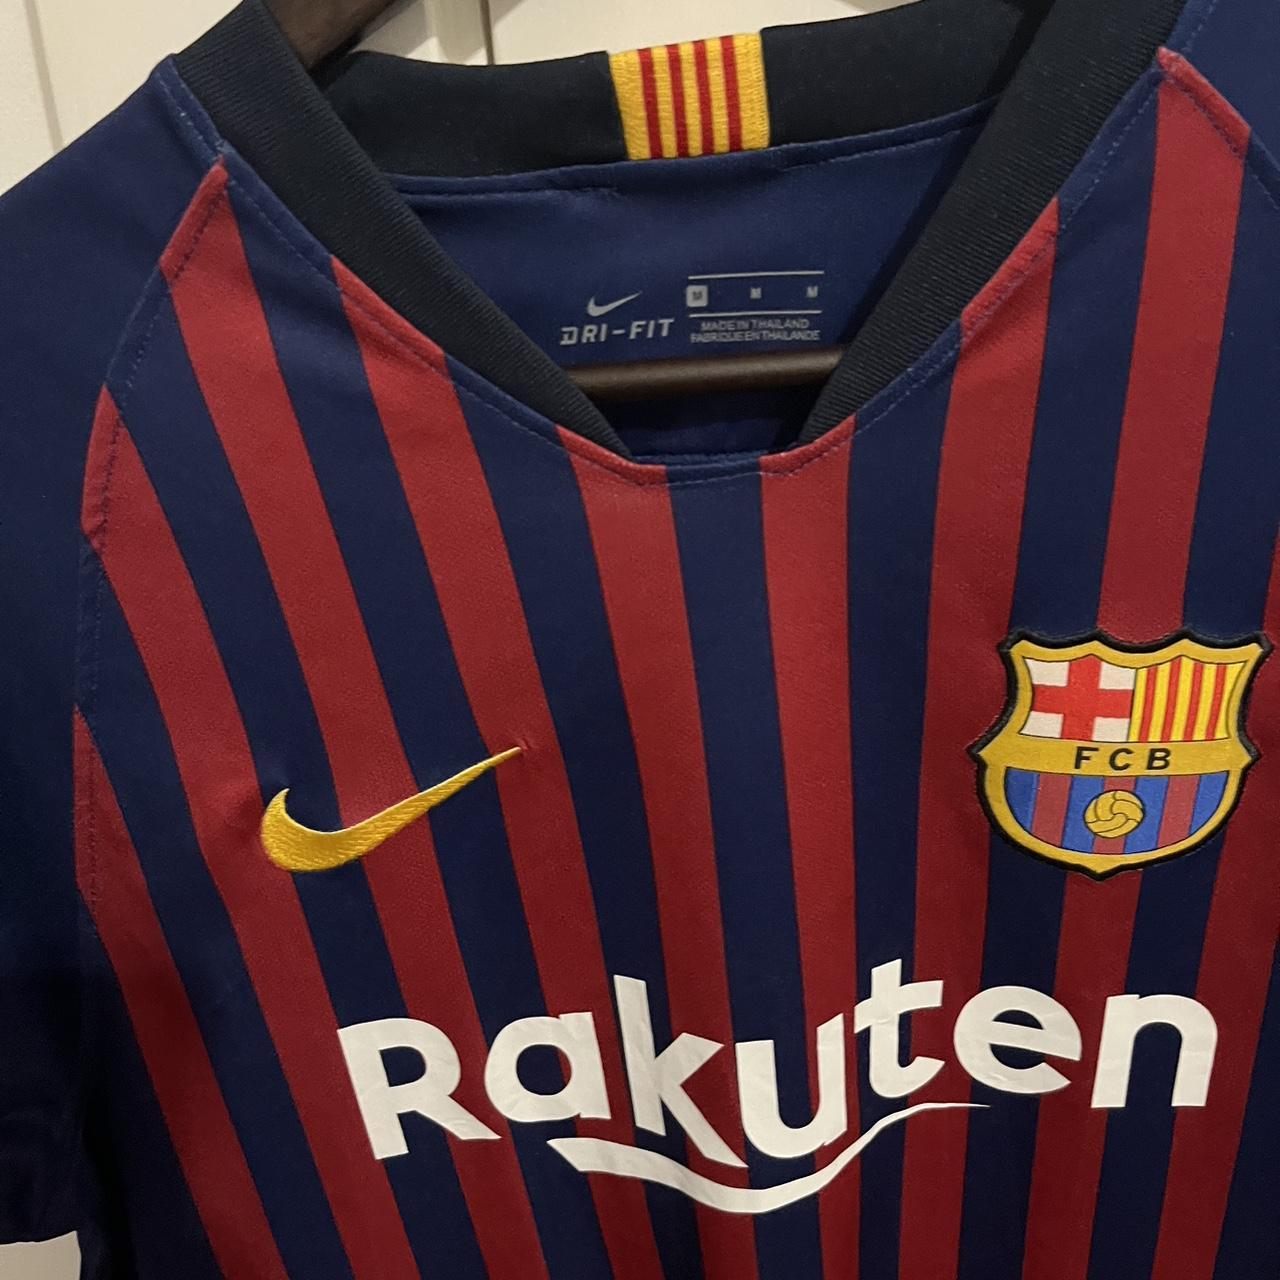 Barcelona 18/19 jersey - Depop